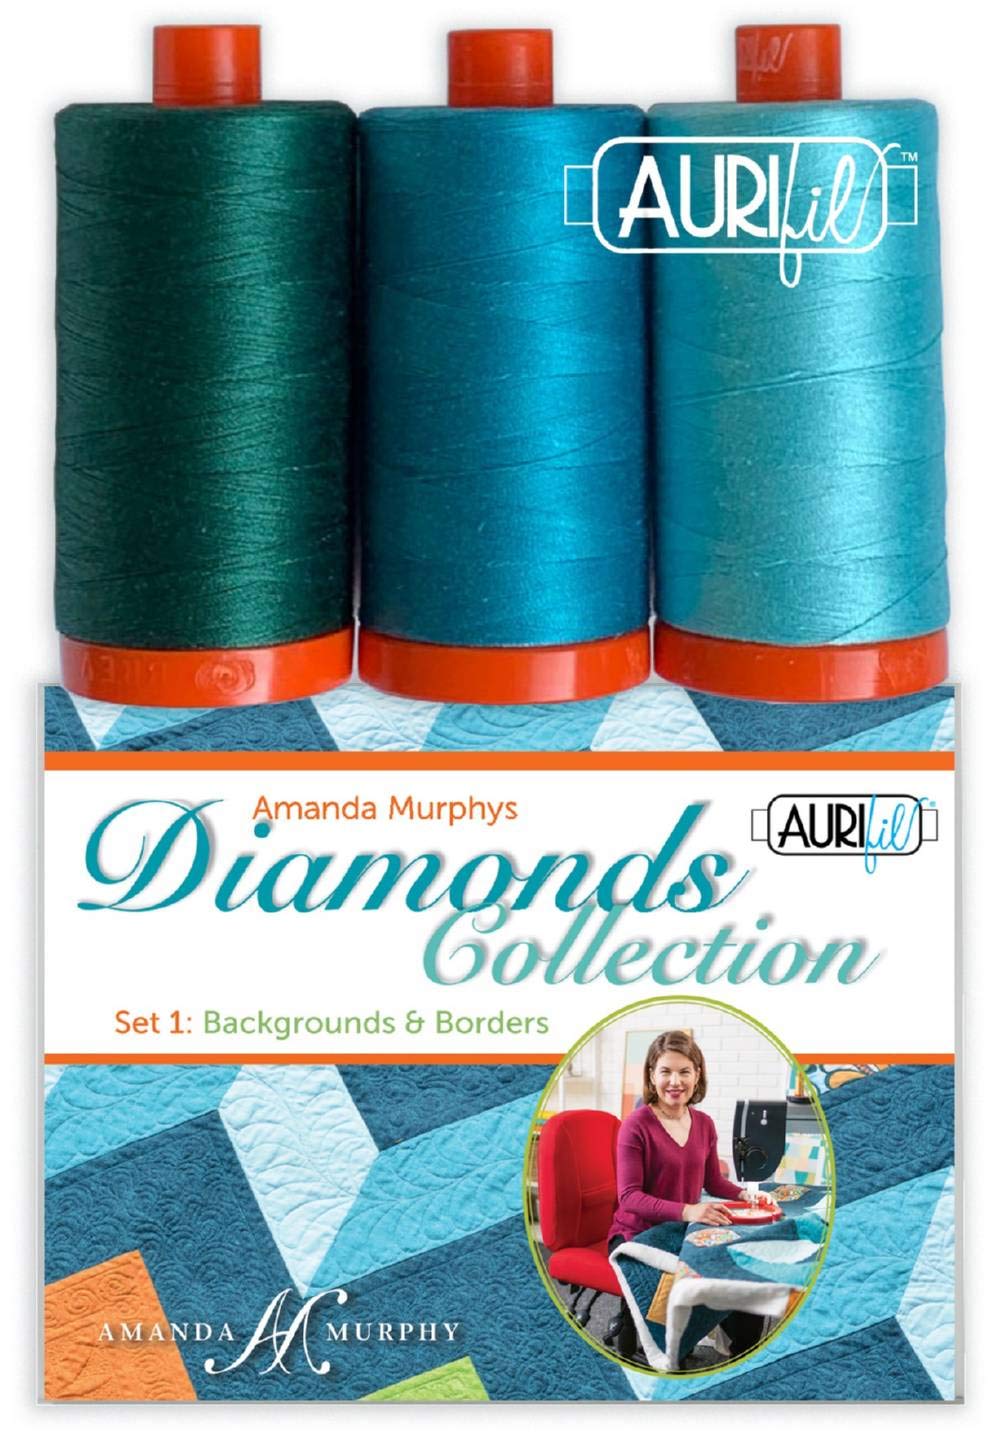 Aurifil Designer Thread Collection-Amanda Murphy Diamonds Collection Set 1, Assorted